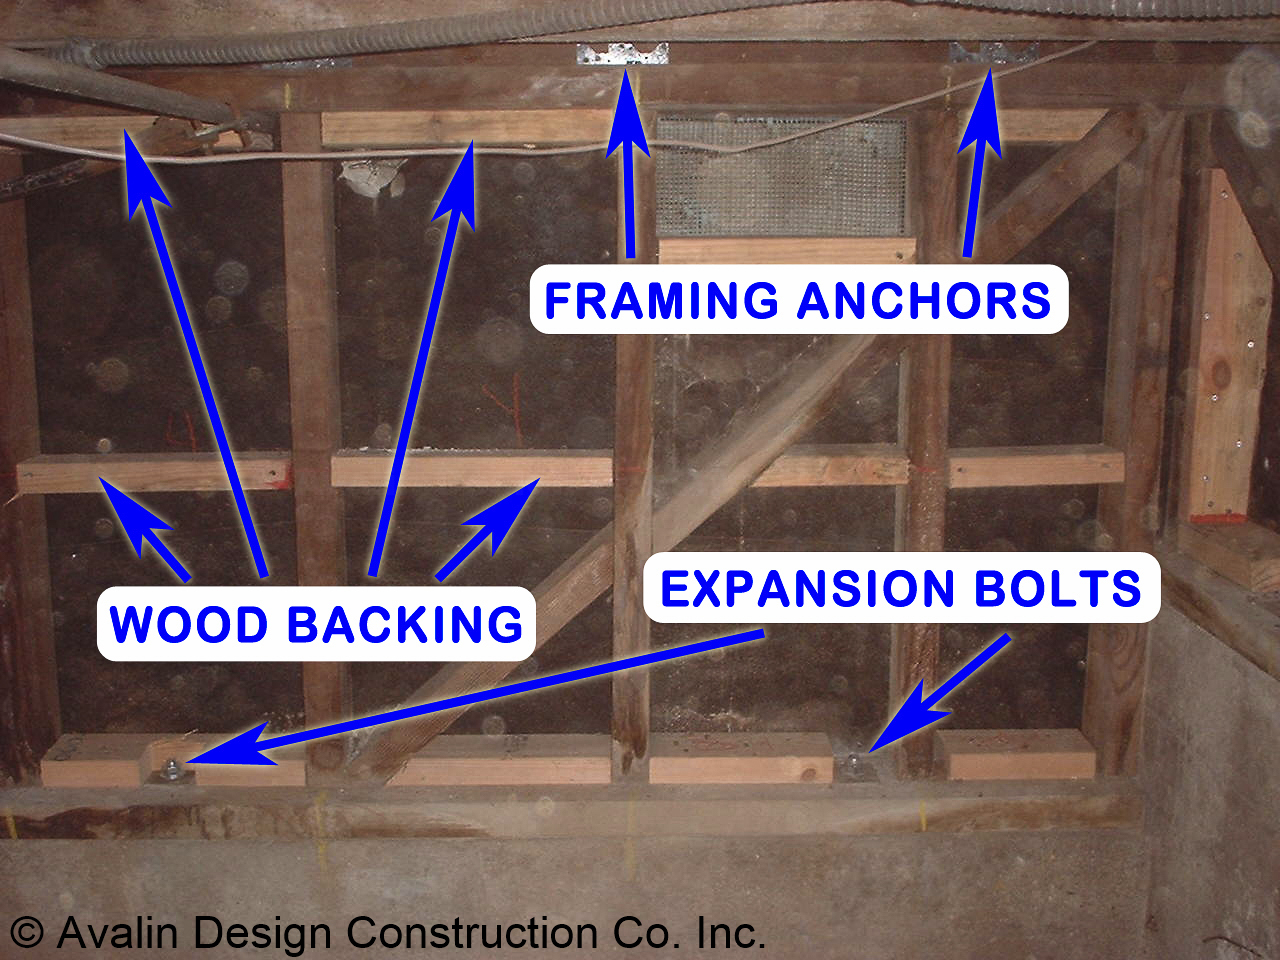 Cripple Wall Bracing in progress - Framing Anchors, Wood Backing, Expansion Bolts